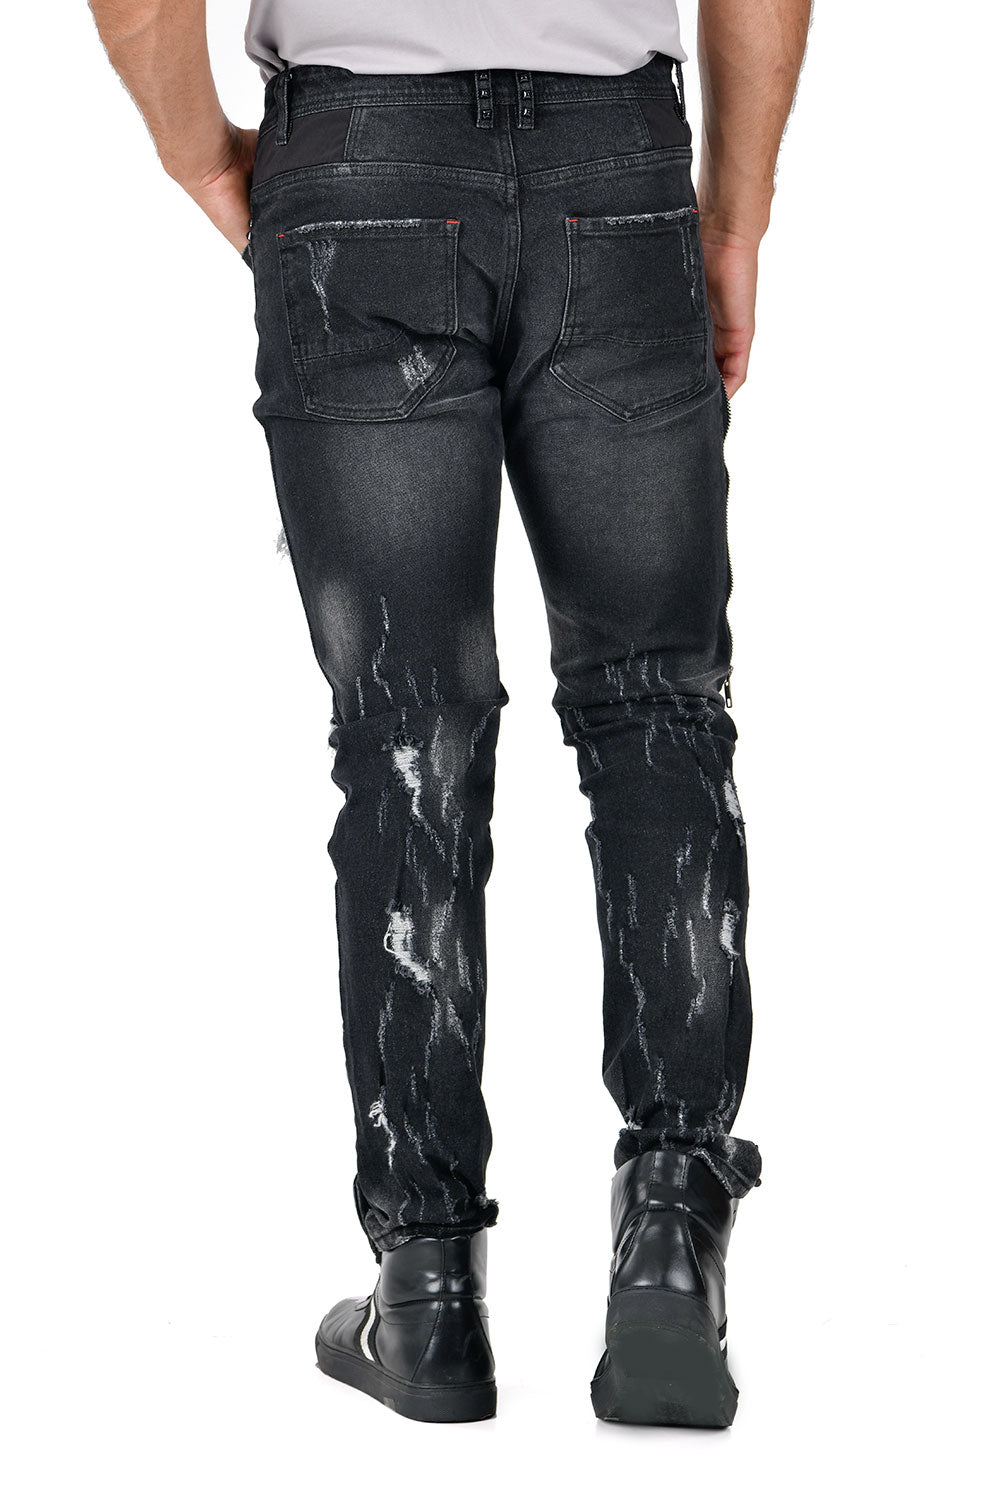 Dark Icon Ripped Plaid Patch Jeans Men High Street Ankle Zipper Men's Jeans  Regular Style Destroyed Denim Pants Men